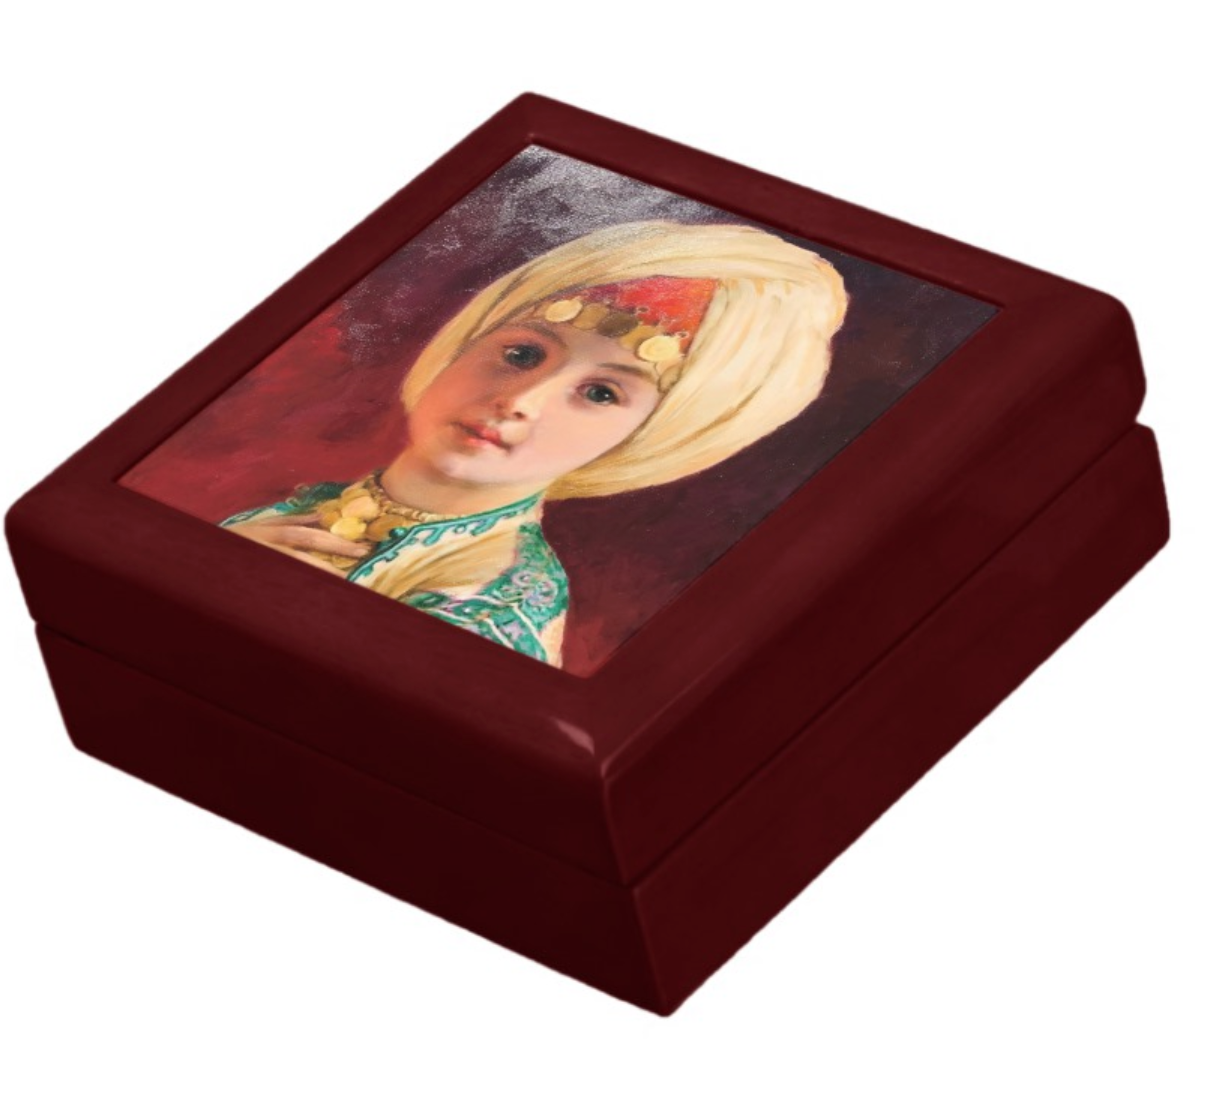 Keepsake/Jewelry Box - Carl Haag Child with Turban - Lacquer Box Mahogany Wood